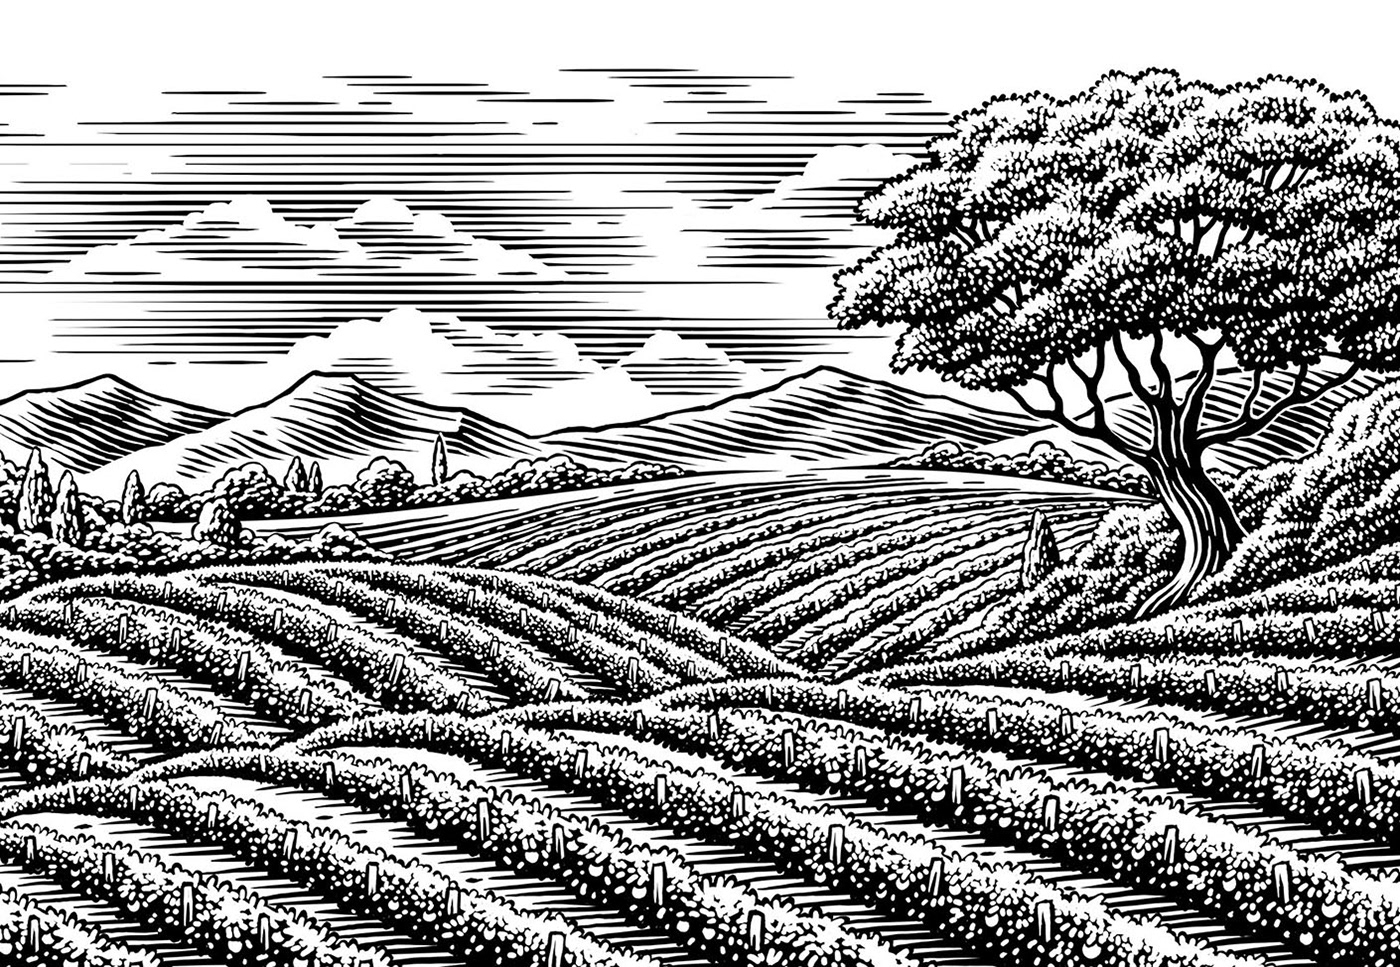 scratchboard illustration of vineyard scene